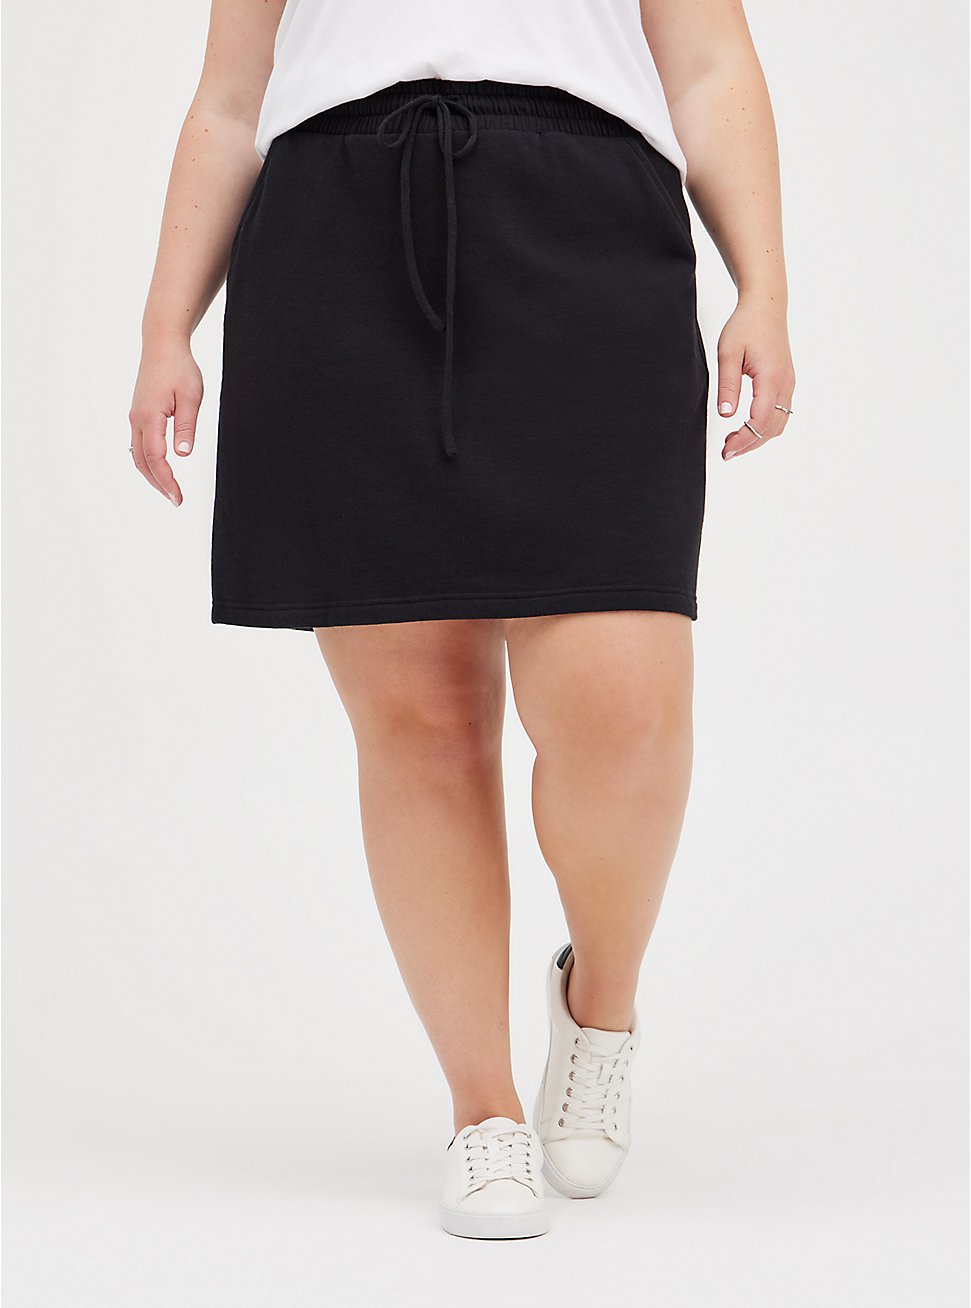 Plus Size A-Line Mini Skirt - Fleece Black, DEEP BLACK, hi-res